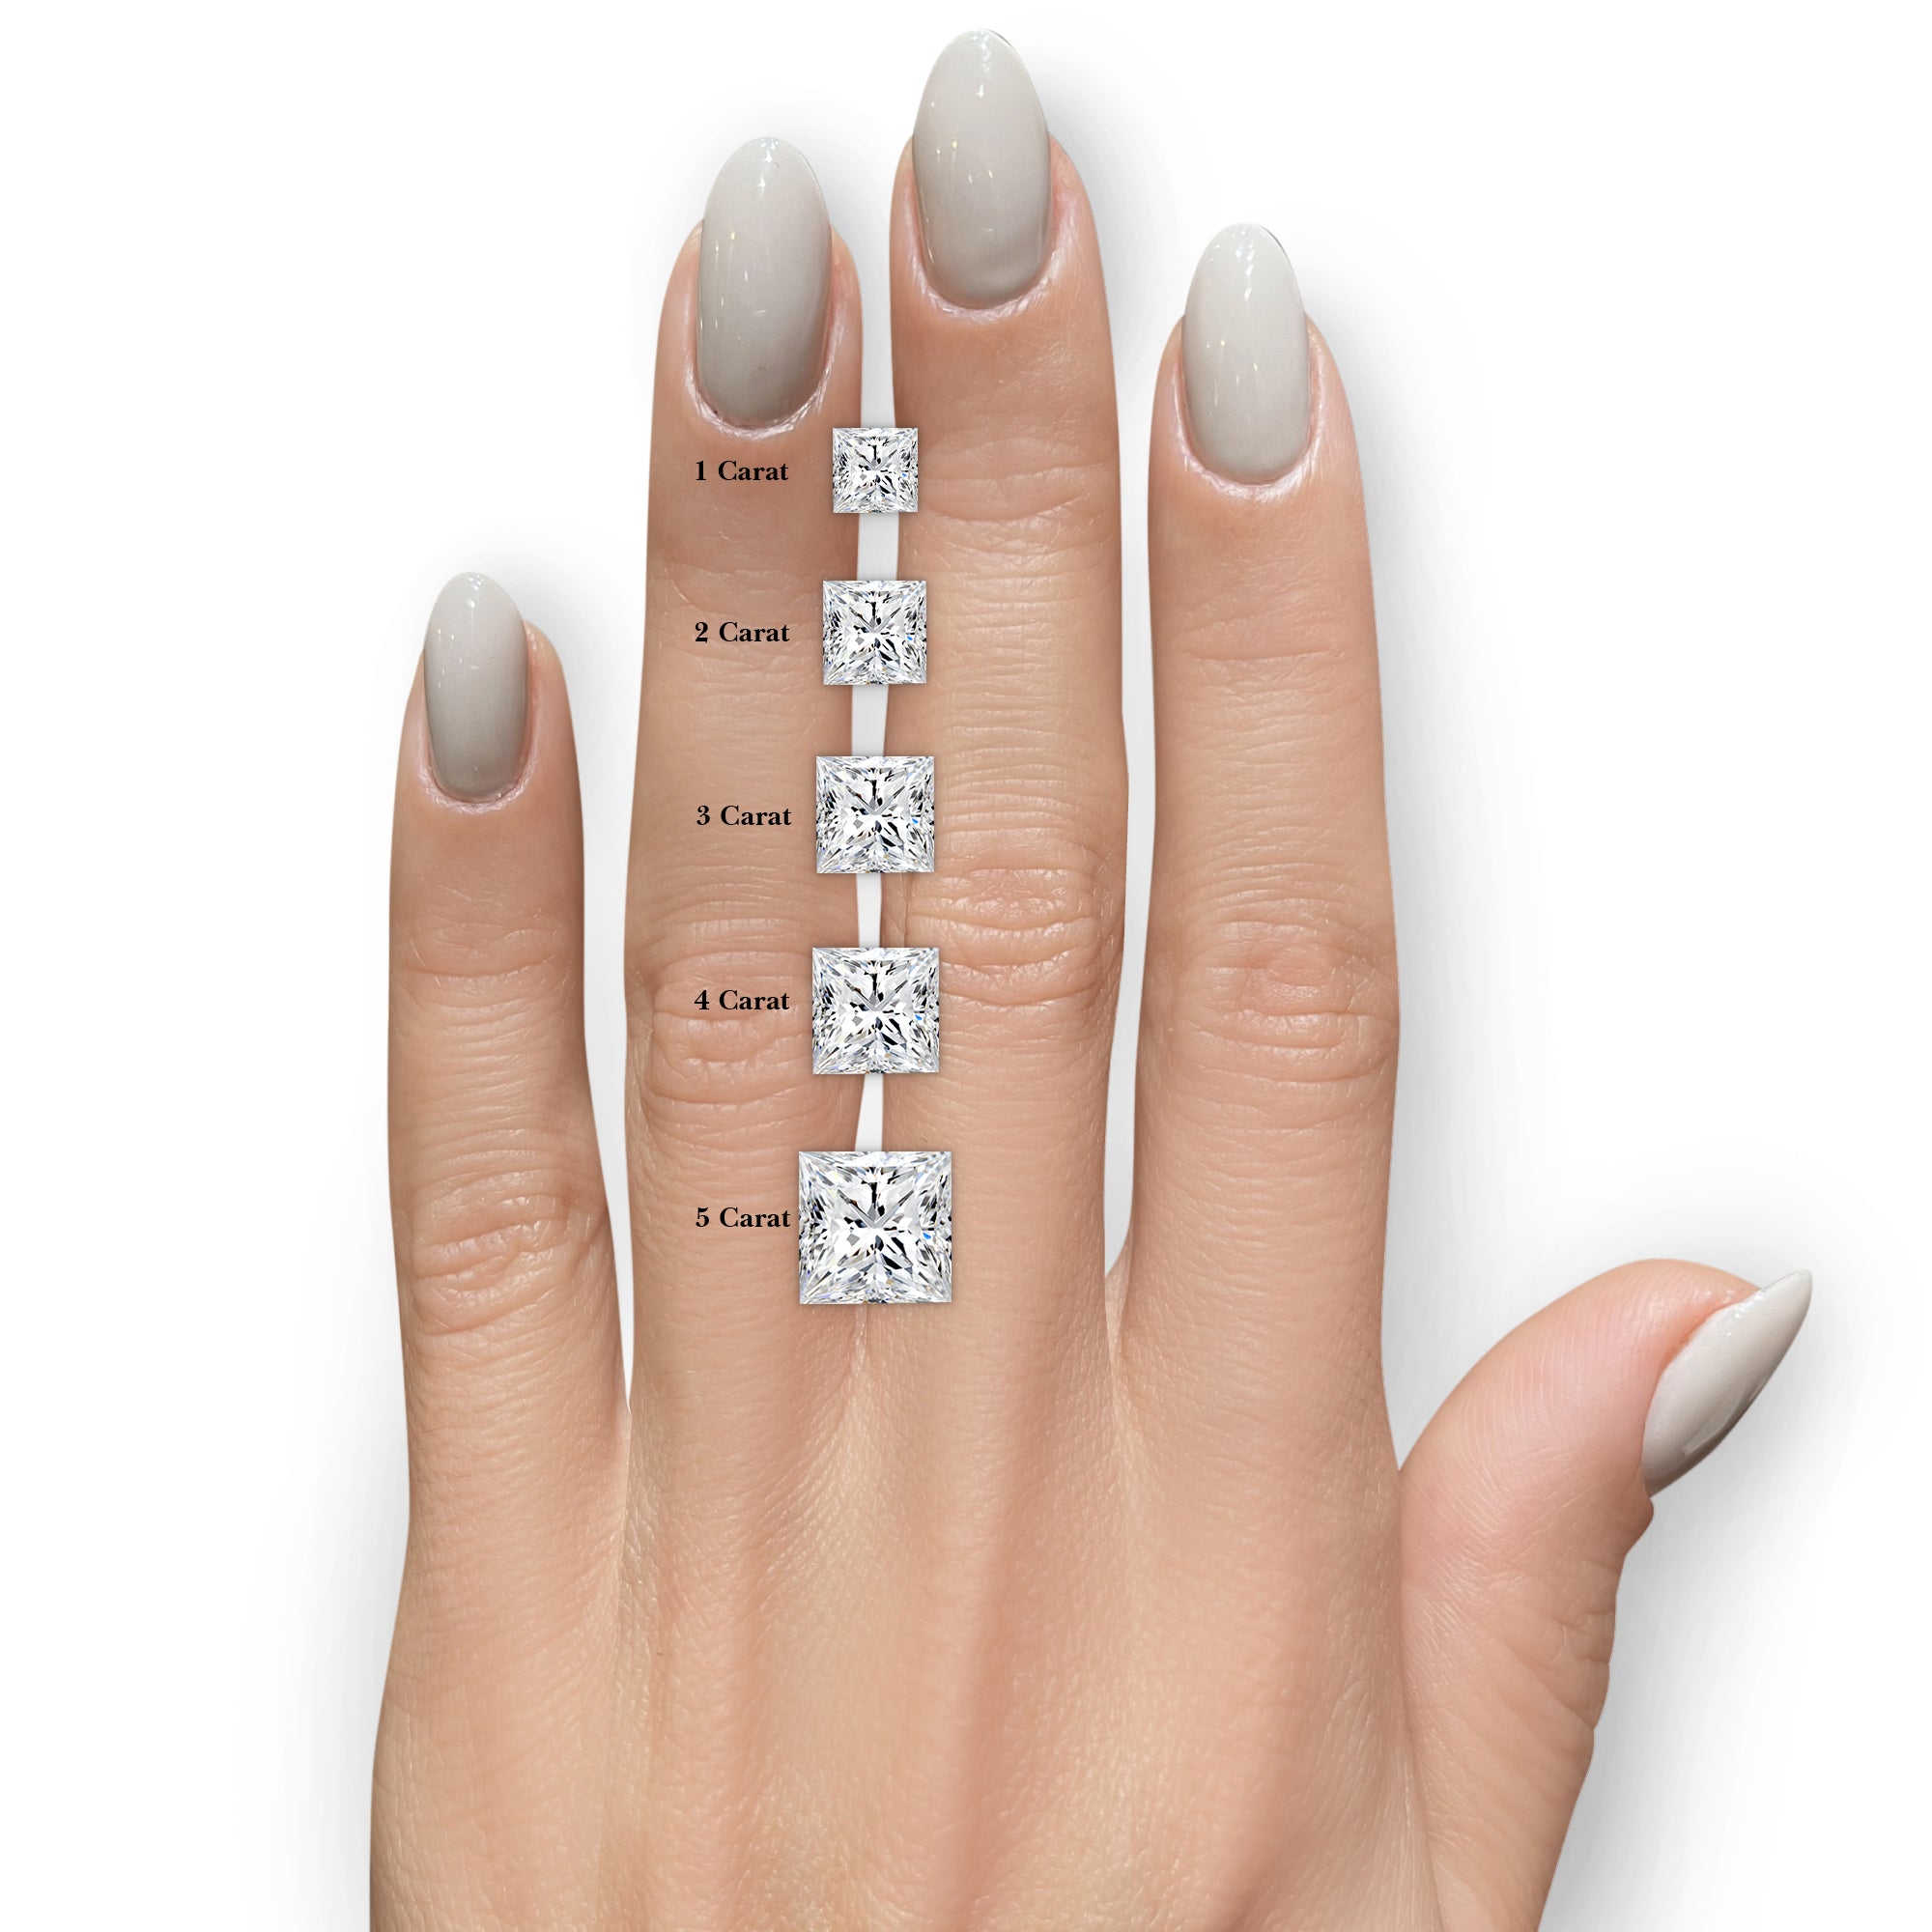 Ella Diamond Engagement Ring -14K White Gold